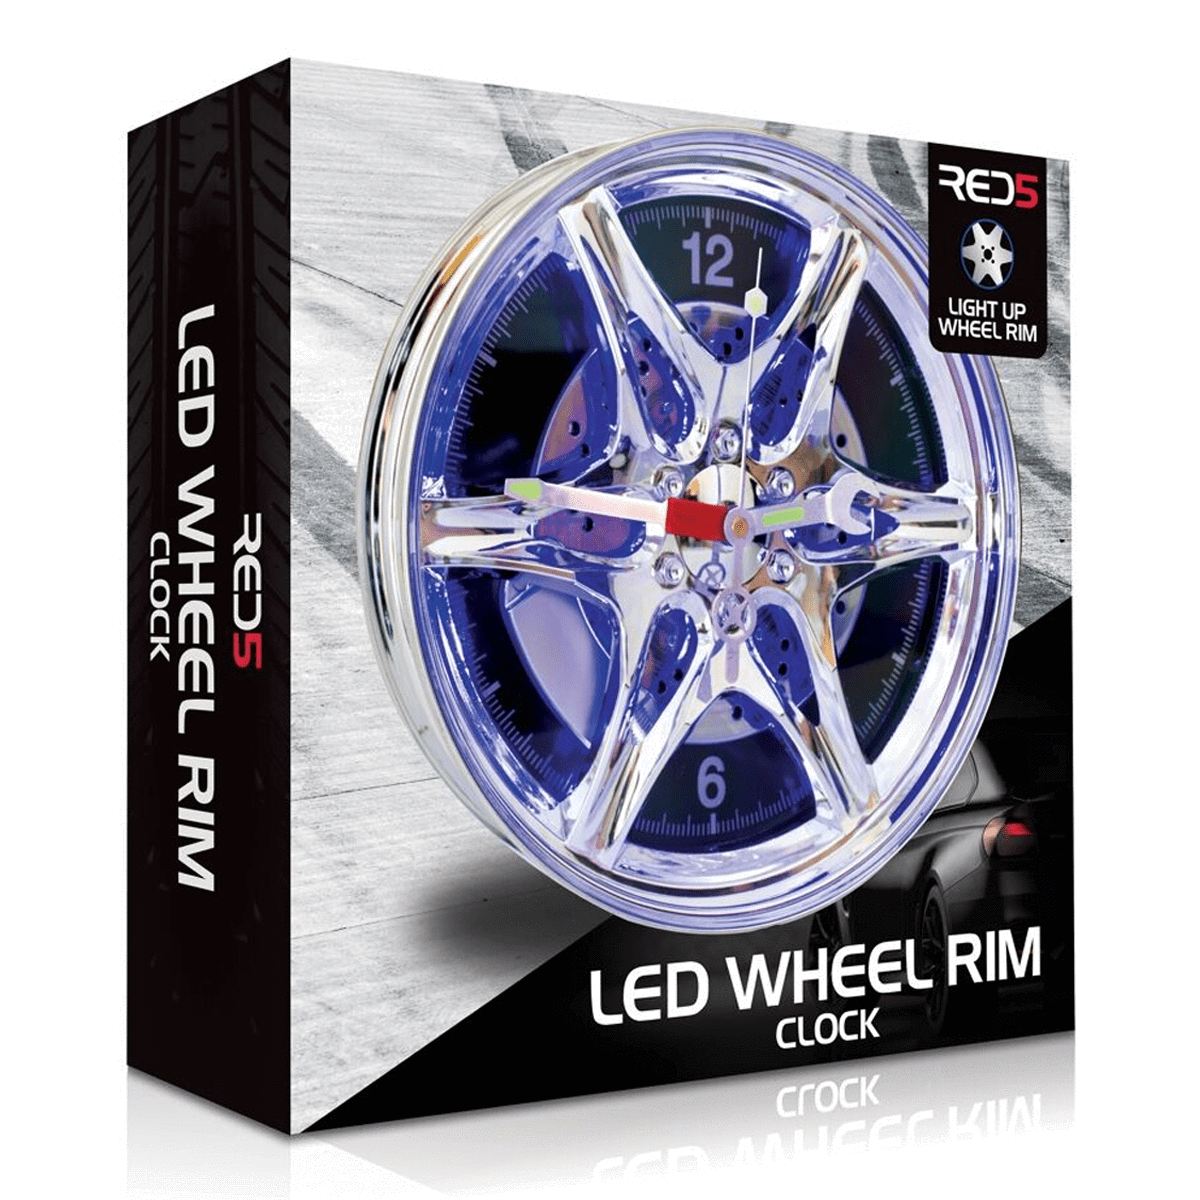 LED Wheel Rim Shape Wall Clock (27 cm) - Red5